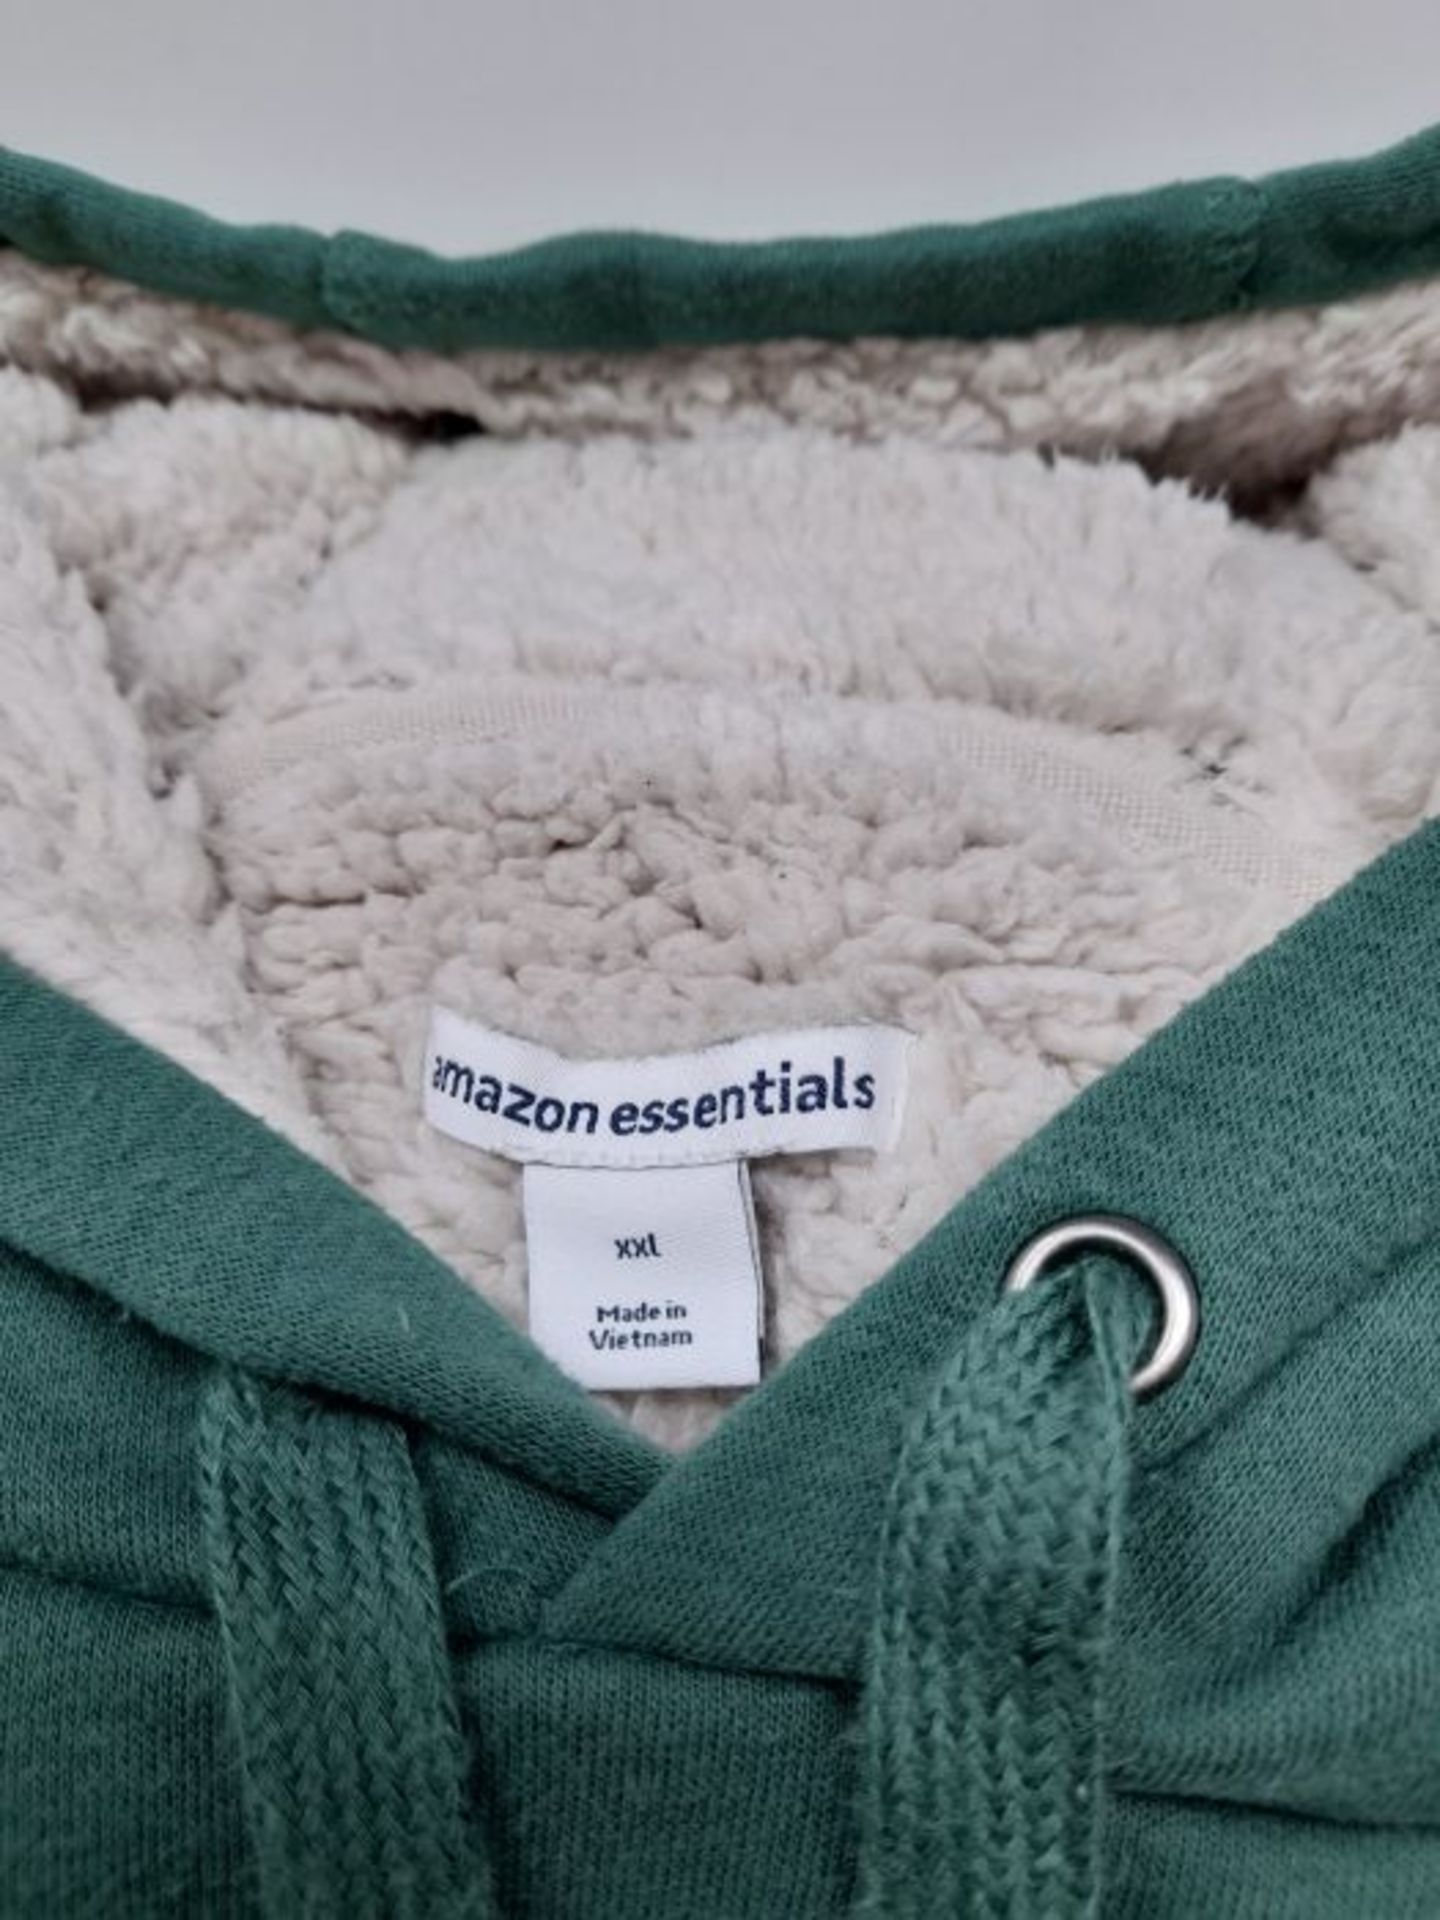 Amazon Essentials Sherpa-Lined Pullover Hoodie Sweatshirt Maglione, Verde, XXL - Image 3 of 3